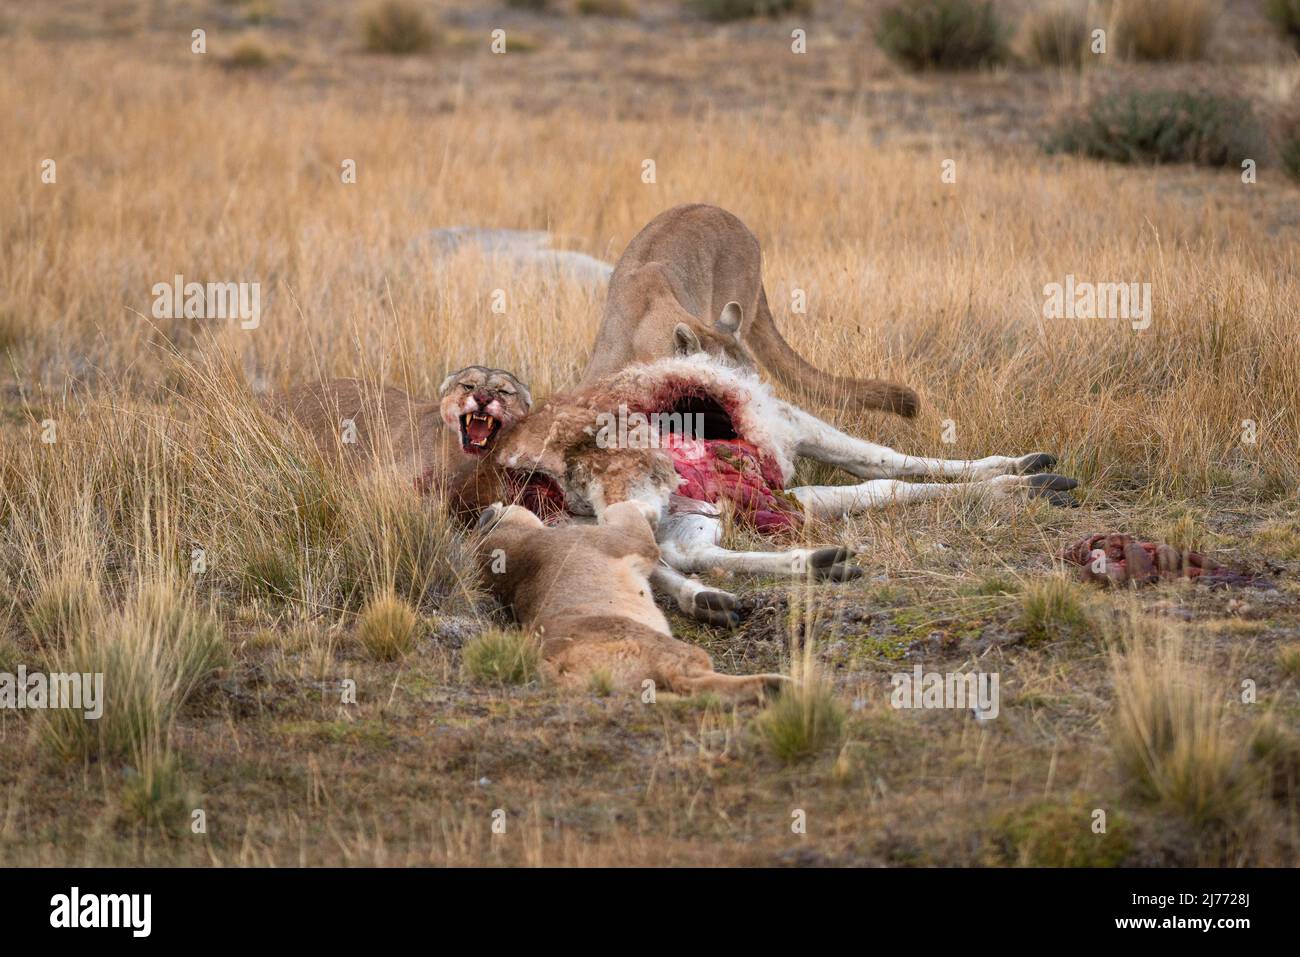 Puma feeding on a Guanaco carcass, Chile Stock Photo